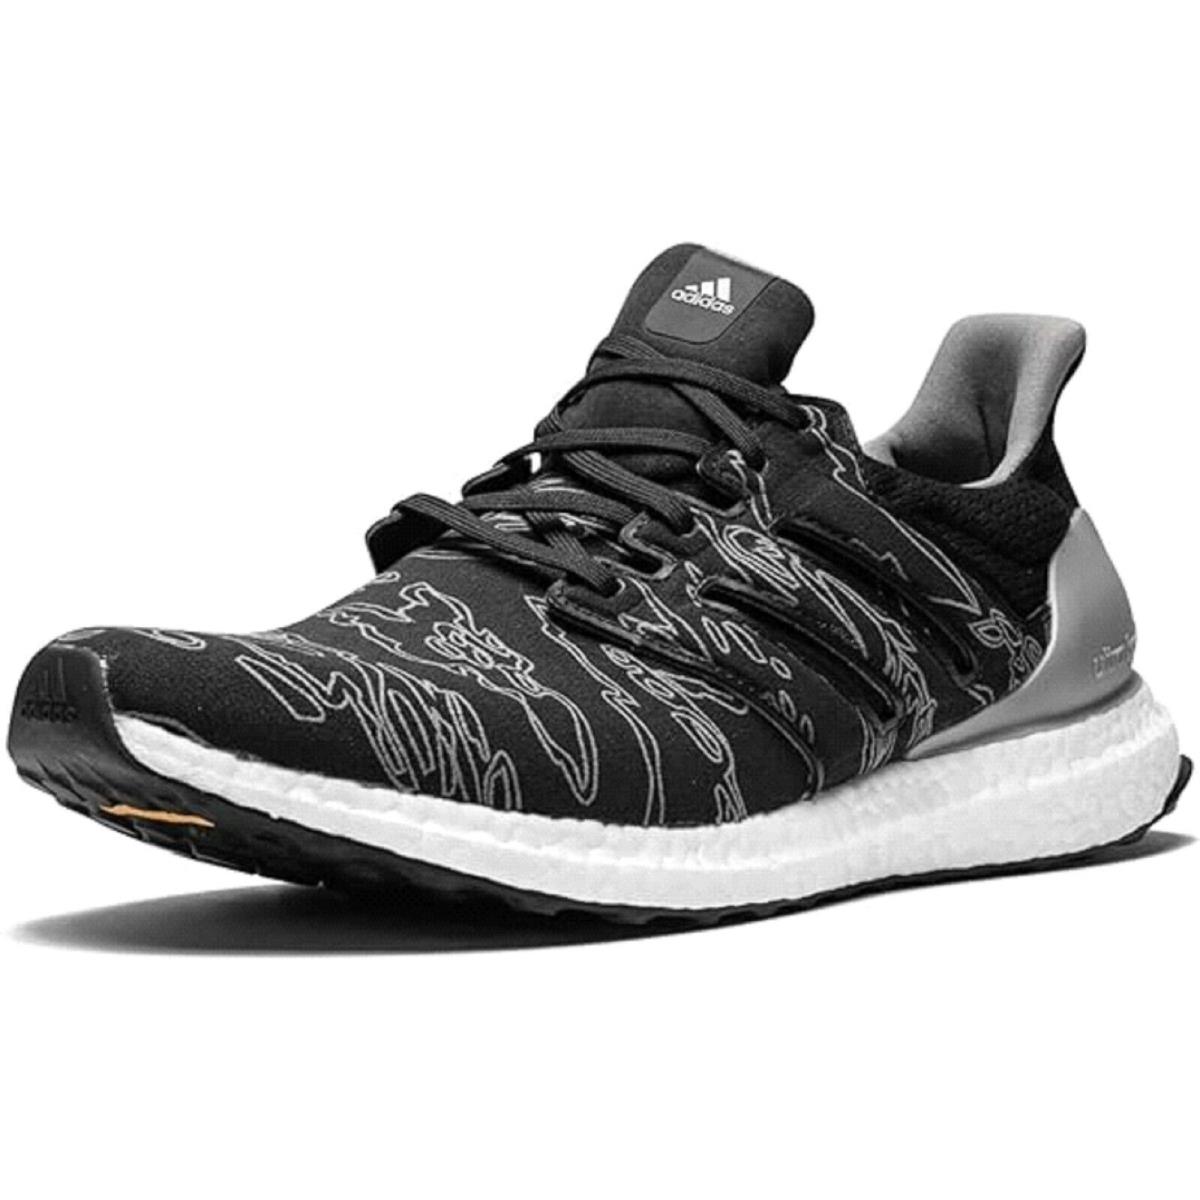 Adidas Men`s Ultraboost Undftd Black/gray Sneakers - 11.5 US - Black/Gray